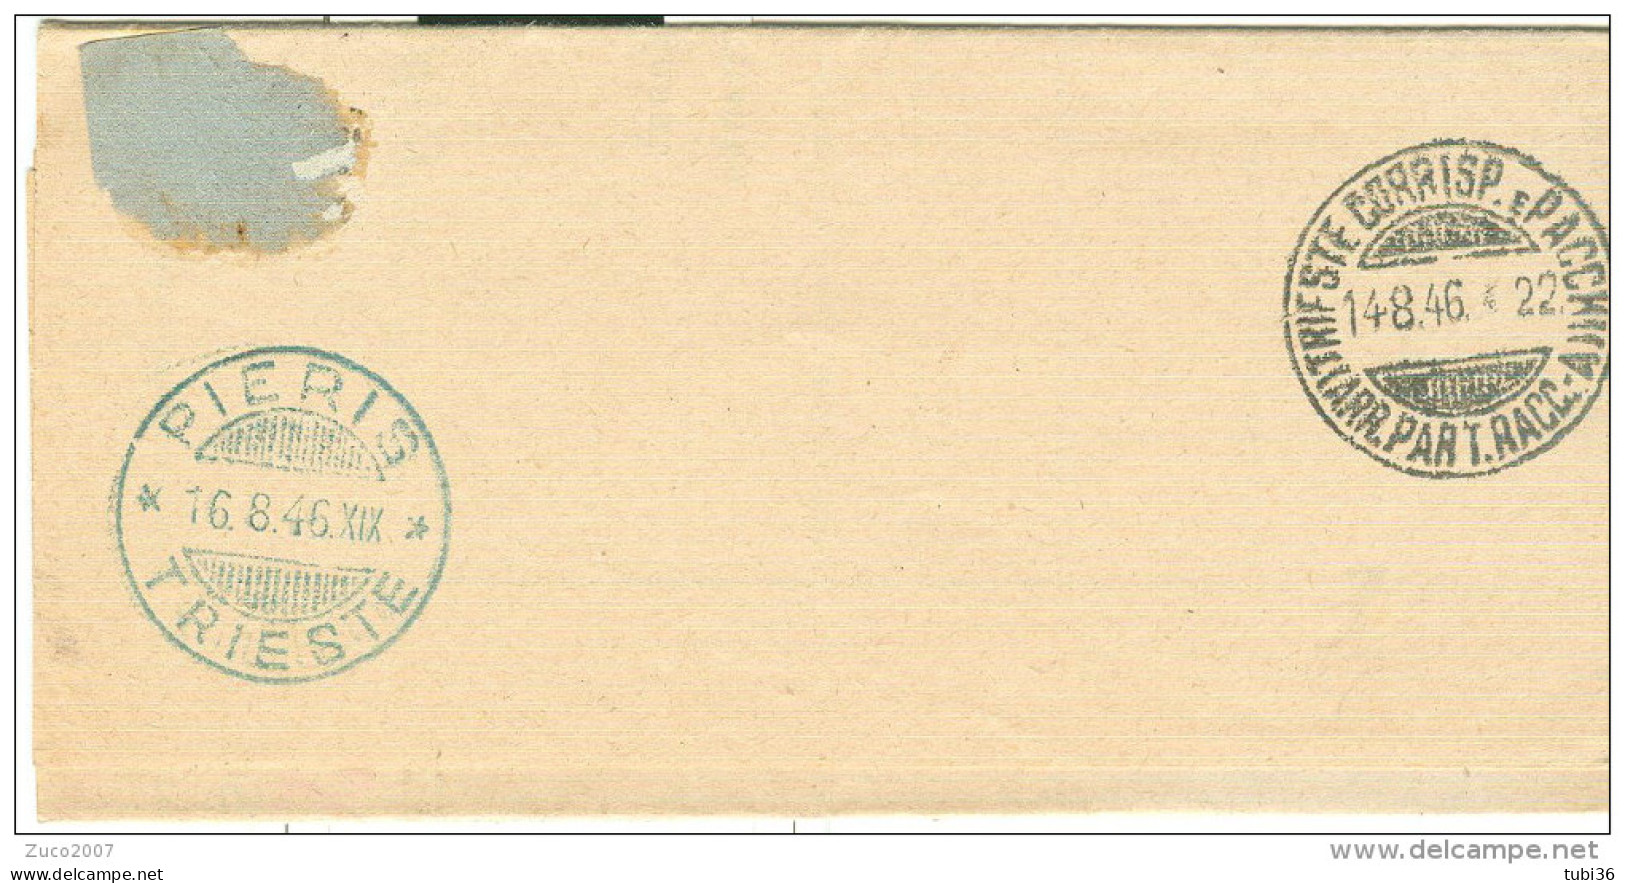 AMG-VG, IMP. £.10,VARIETA SOPRASTAMPA SPOSTATA ISOLATO IN TARIFFA MANO. RACC., 1946, POSTE MONFALCONE -PIERIS, TRIESTE - Marcophilia